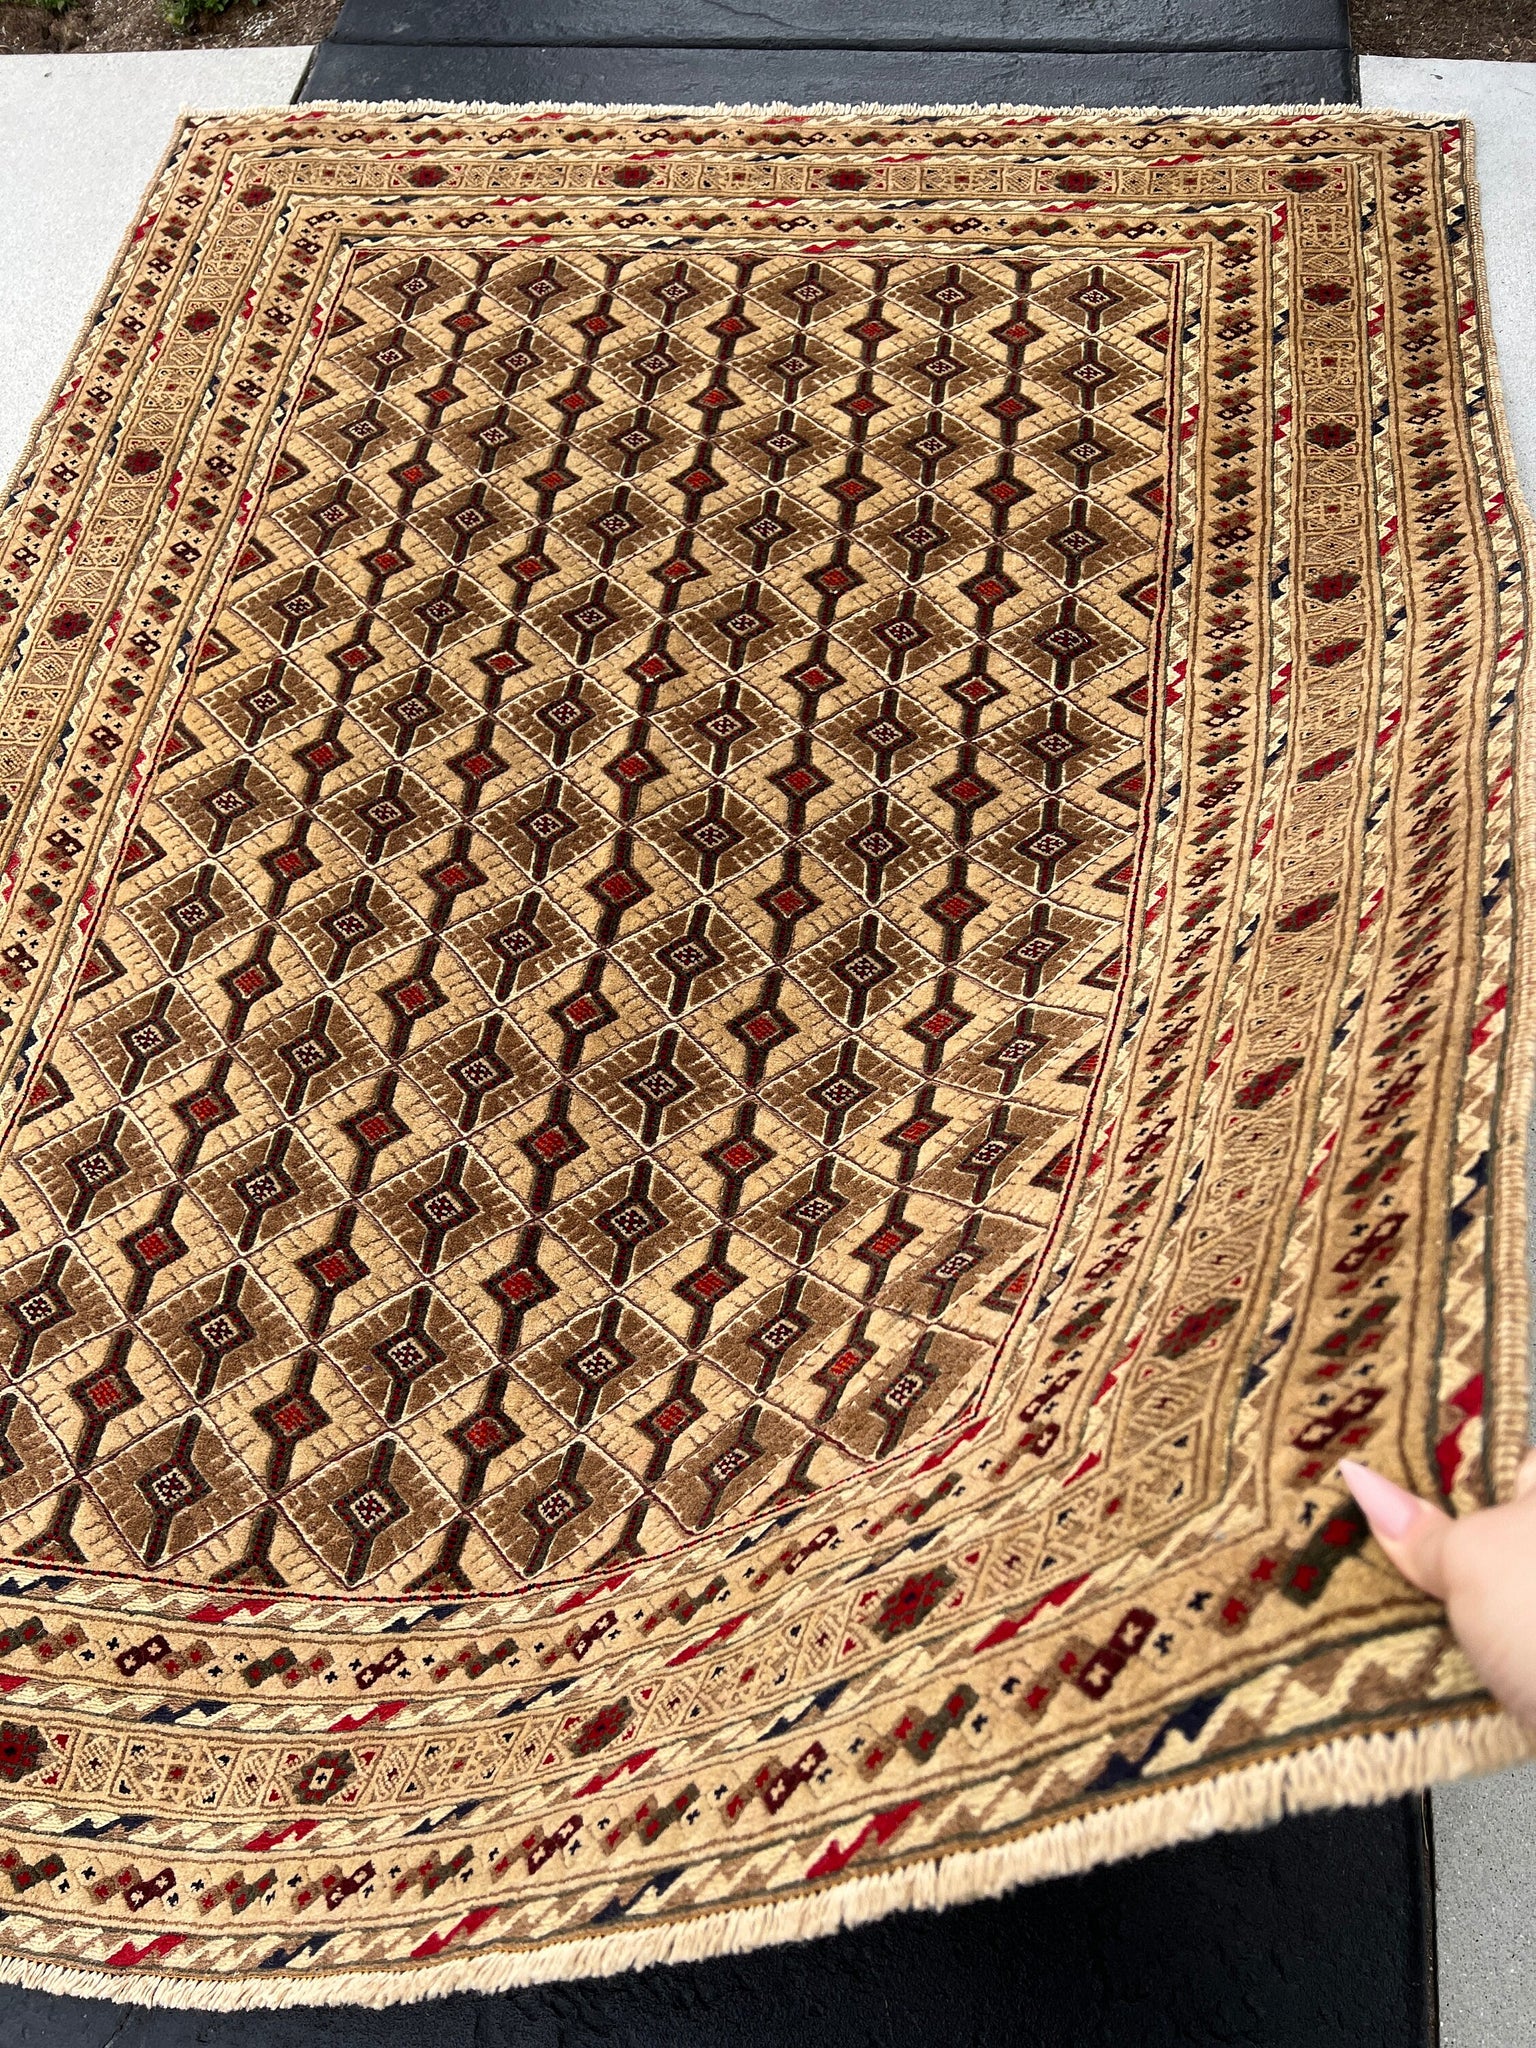 5x6 (150x180) Handmade Afghan Rug | Taupe Red Mocha Brown Cream Black Charcoal | Hand Knotted Turkish Geometric Wool Persian Bohemian